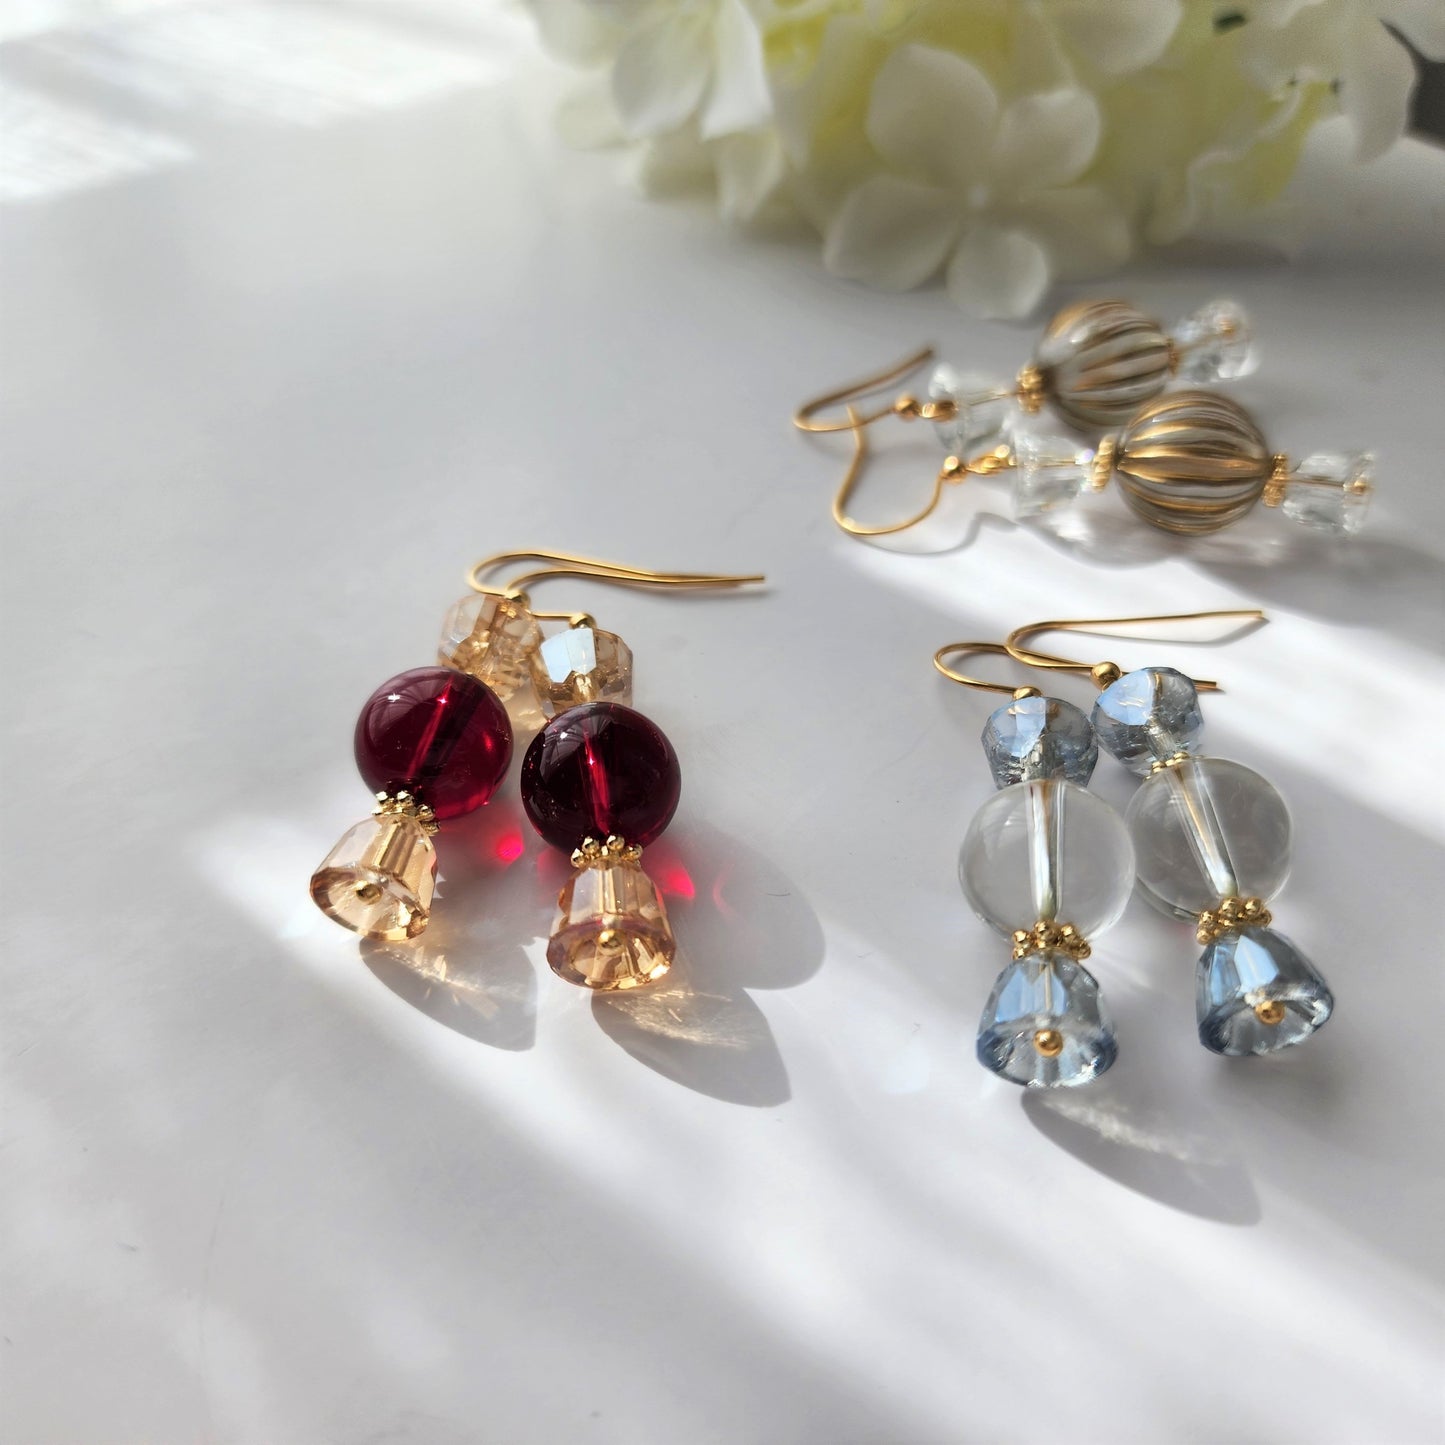 Bubble Candy earrings, sweet crystal candy earrings, cute fruit candy earrings, gift for her